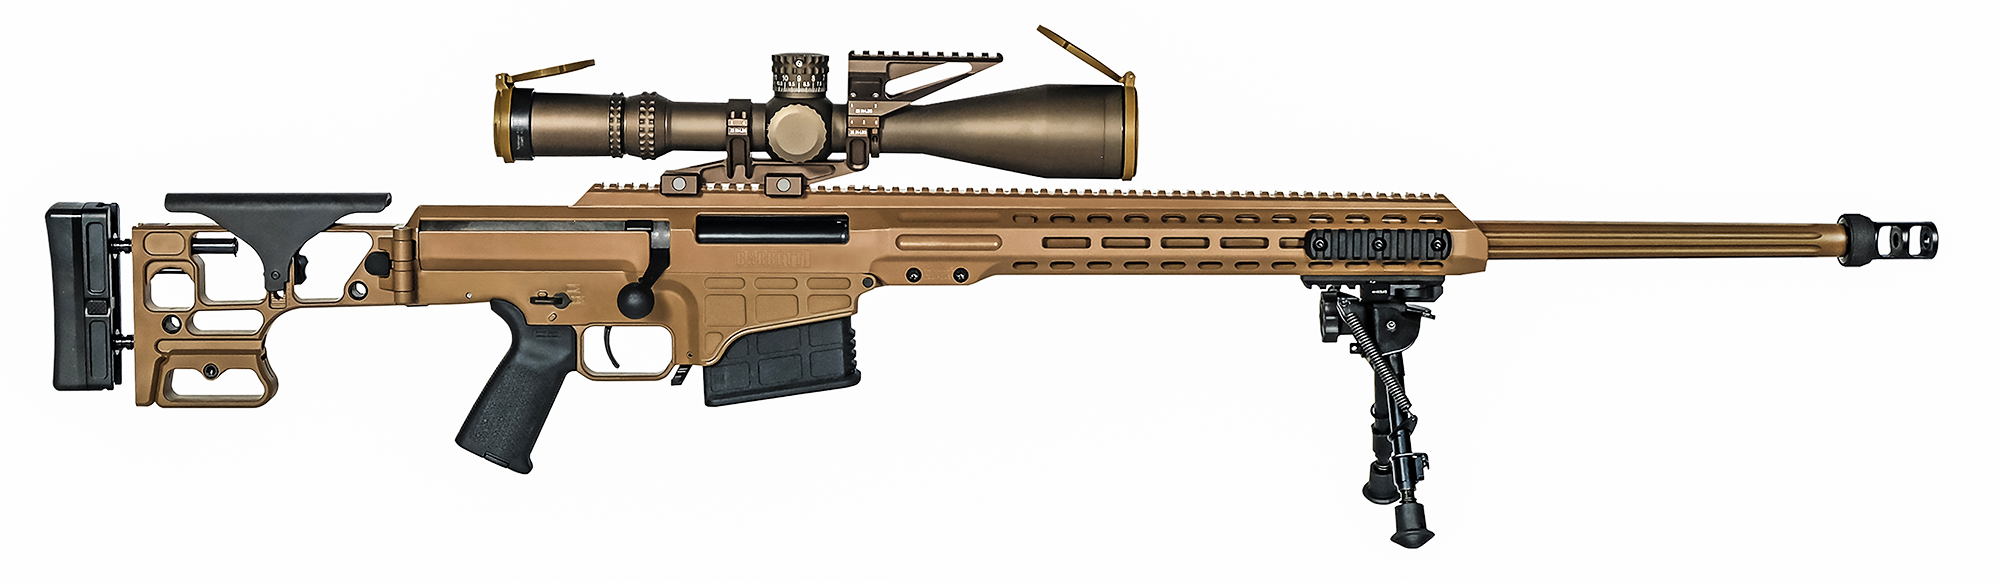 Barrett MRAD long-range rifles